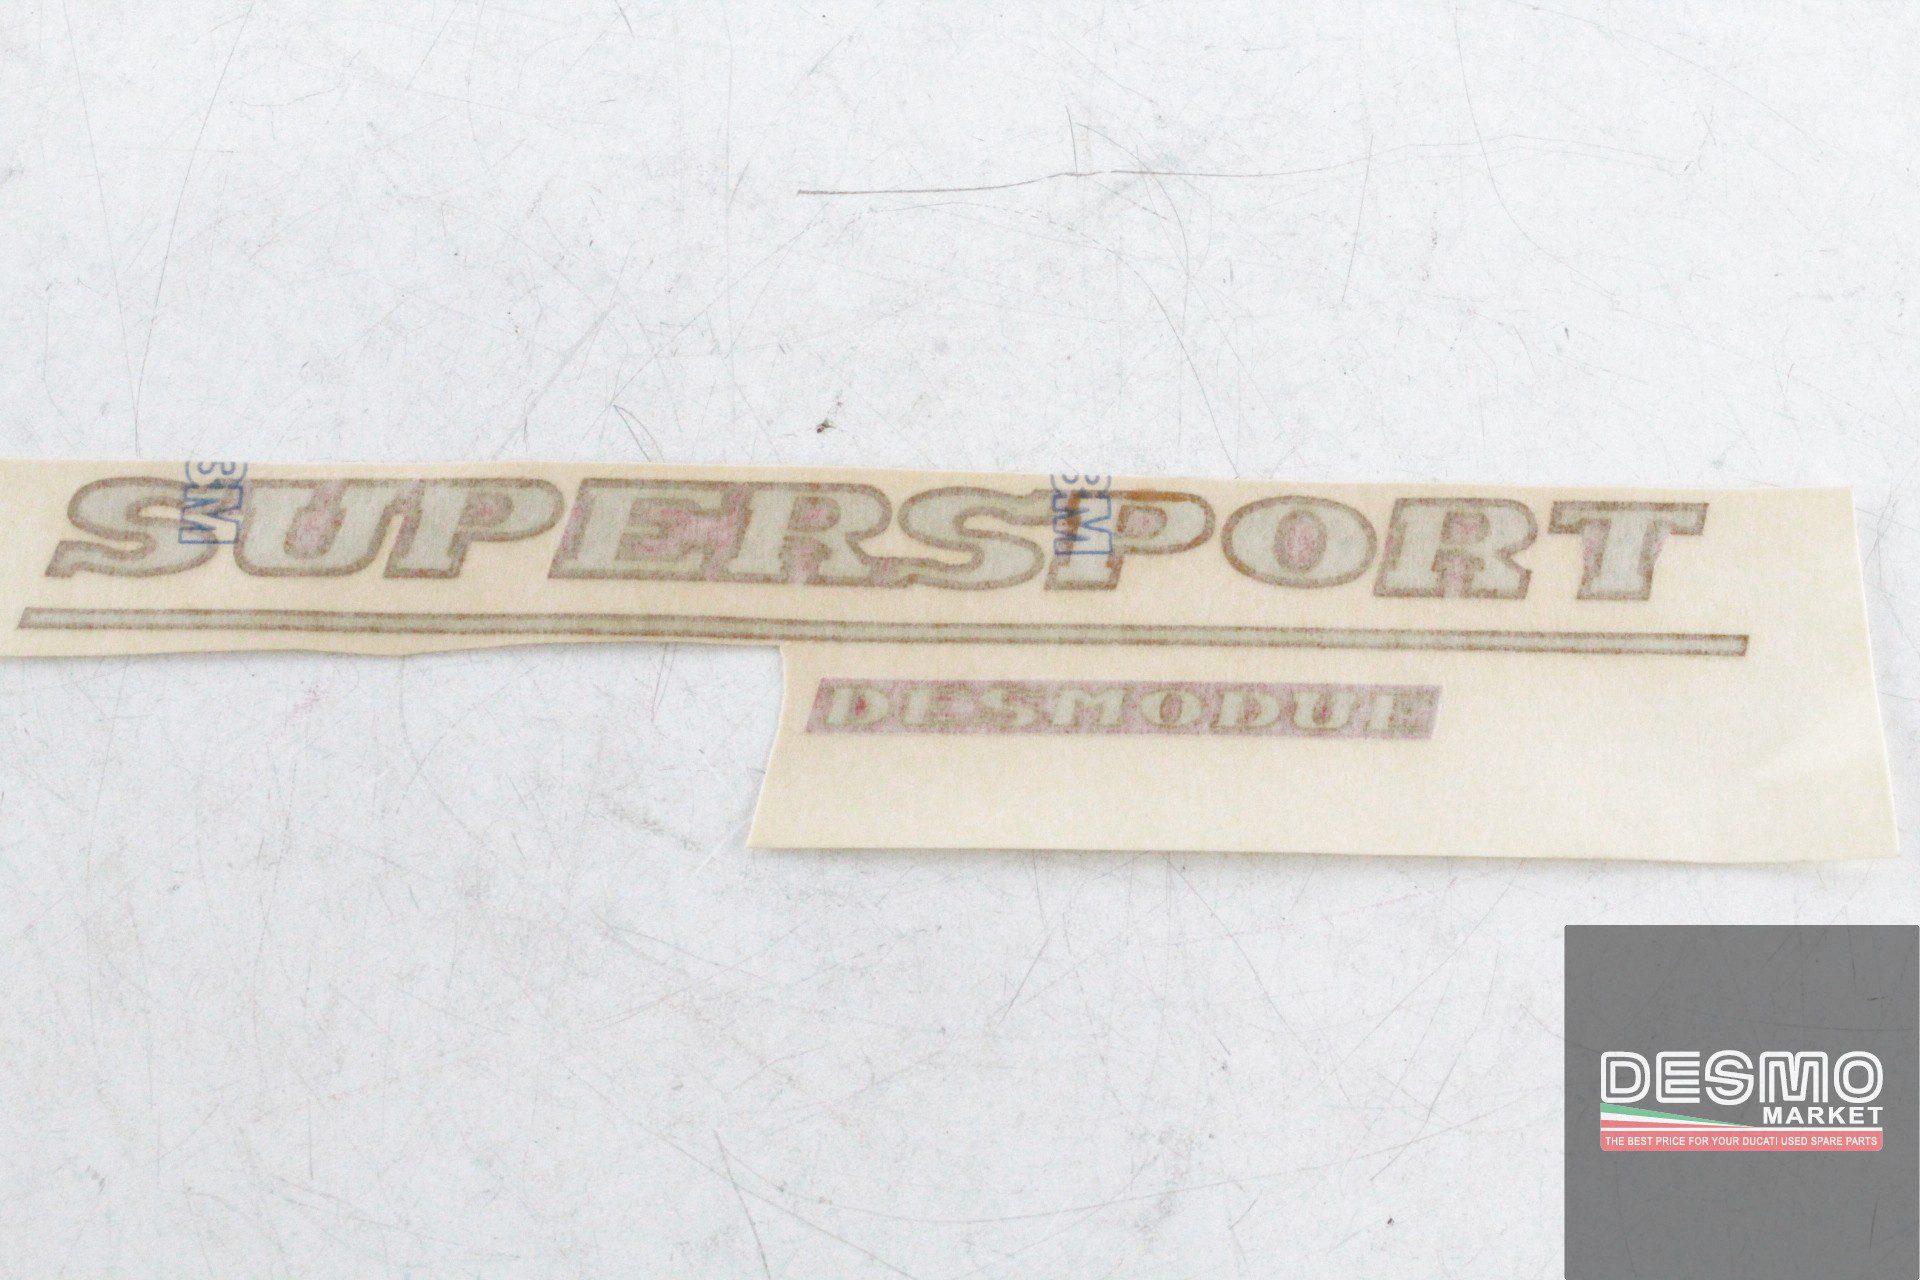 Adesivo carena sinistra SUPERSPORT DESMODUE ducati supersport SS 600 750